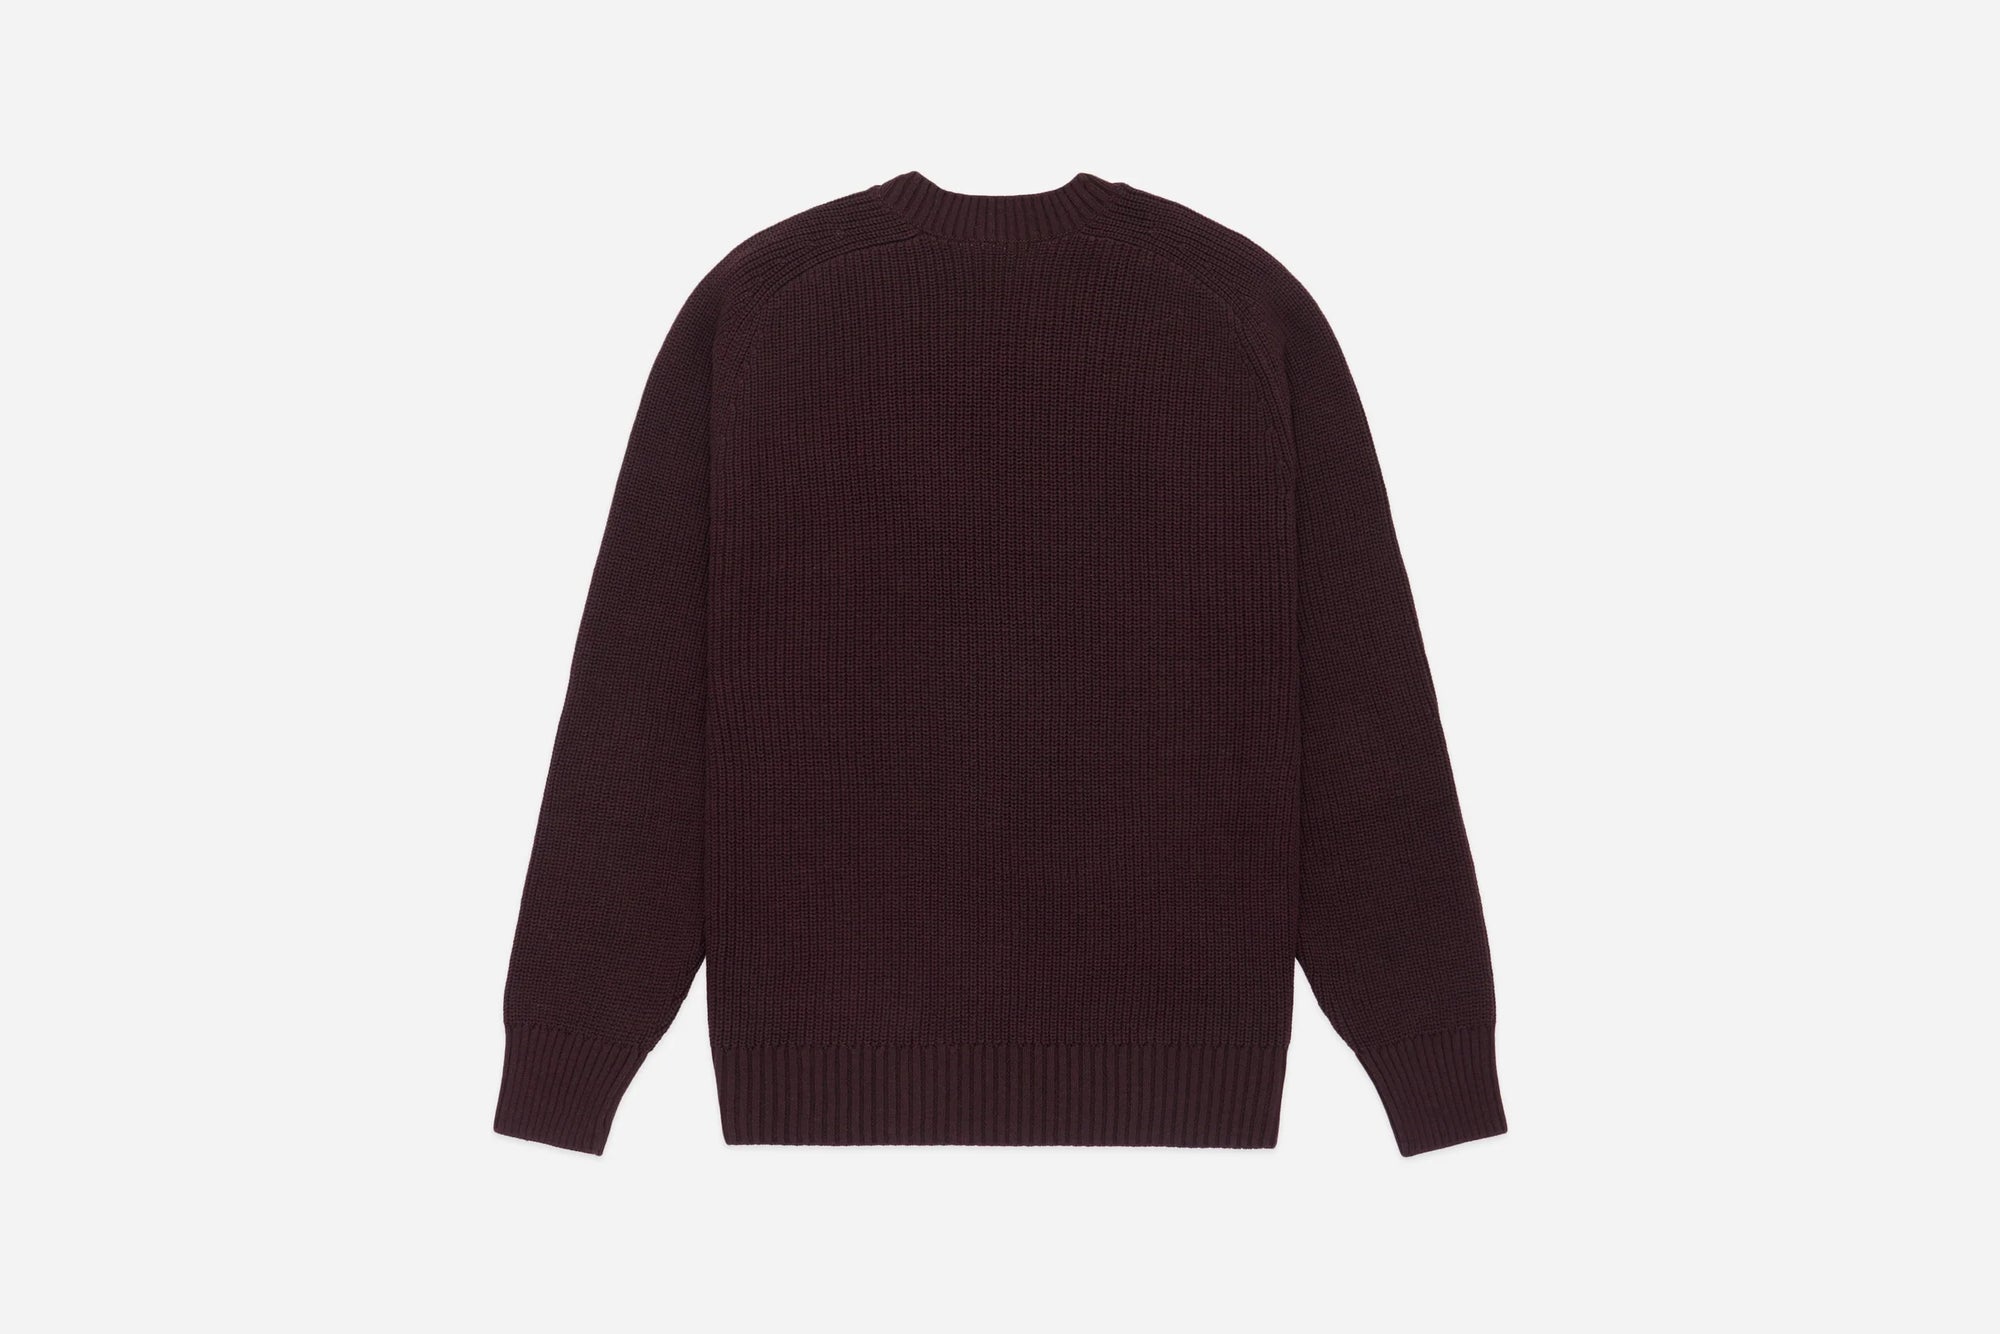 3Sixteen Cotton Crewneck Sweater in Burgundy